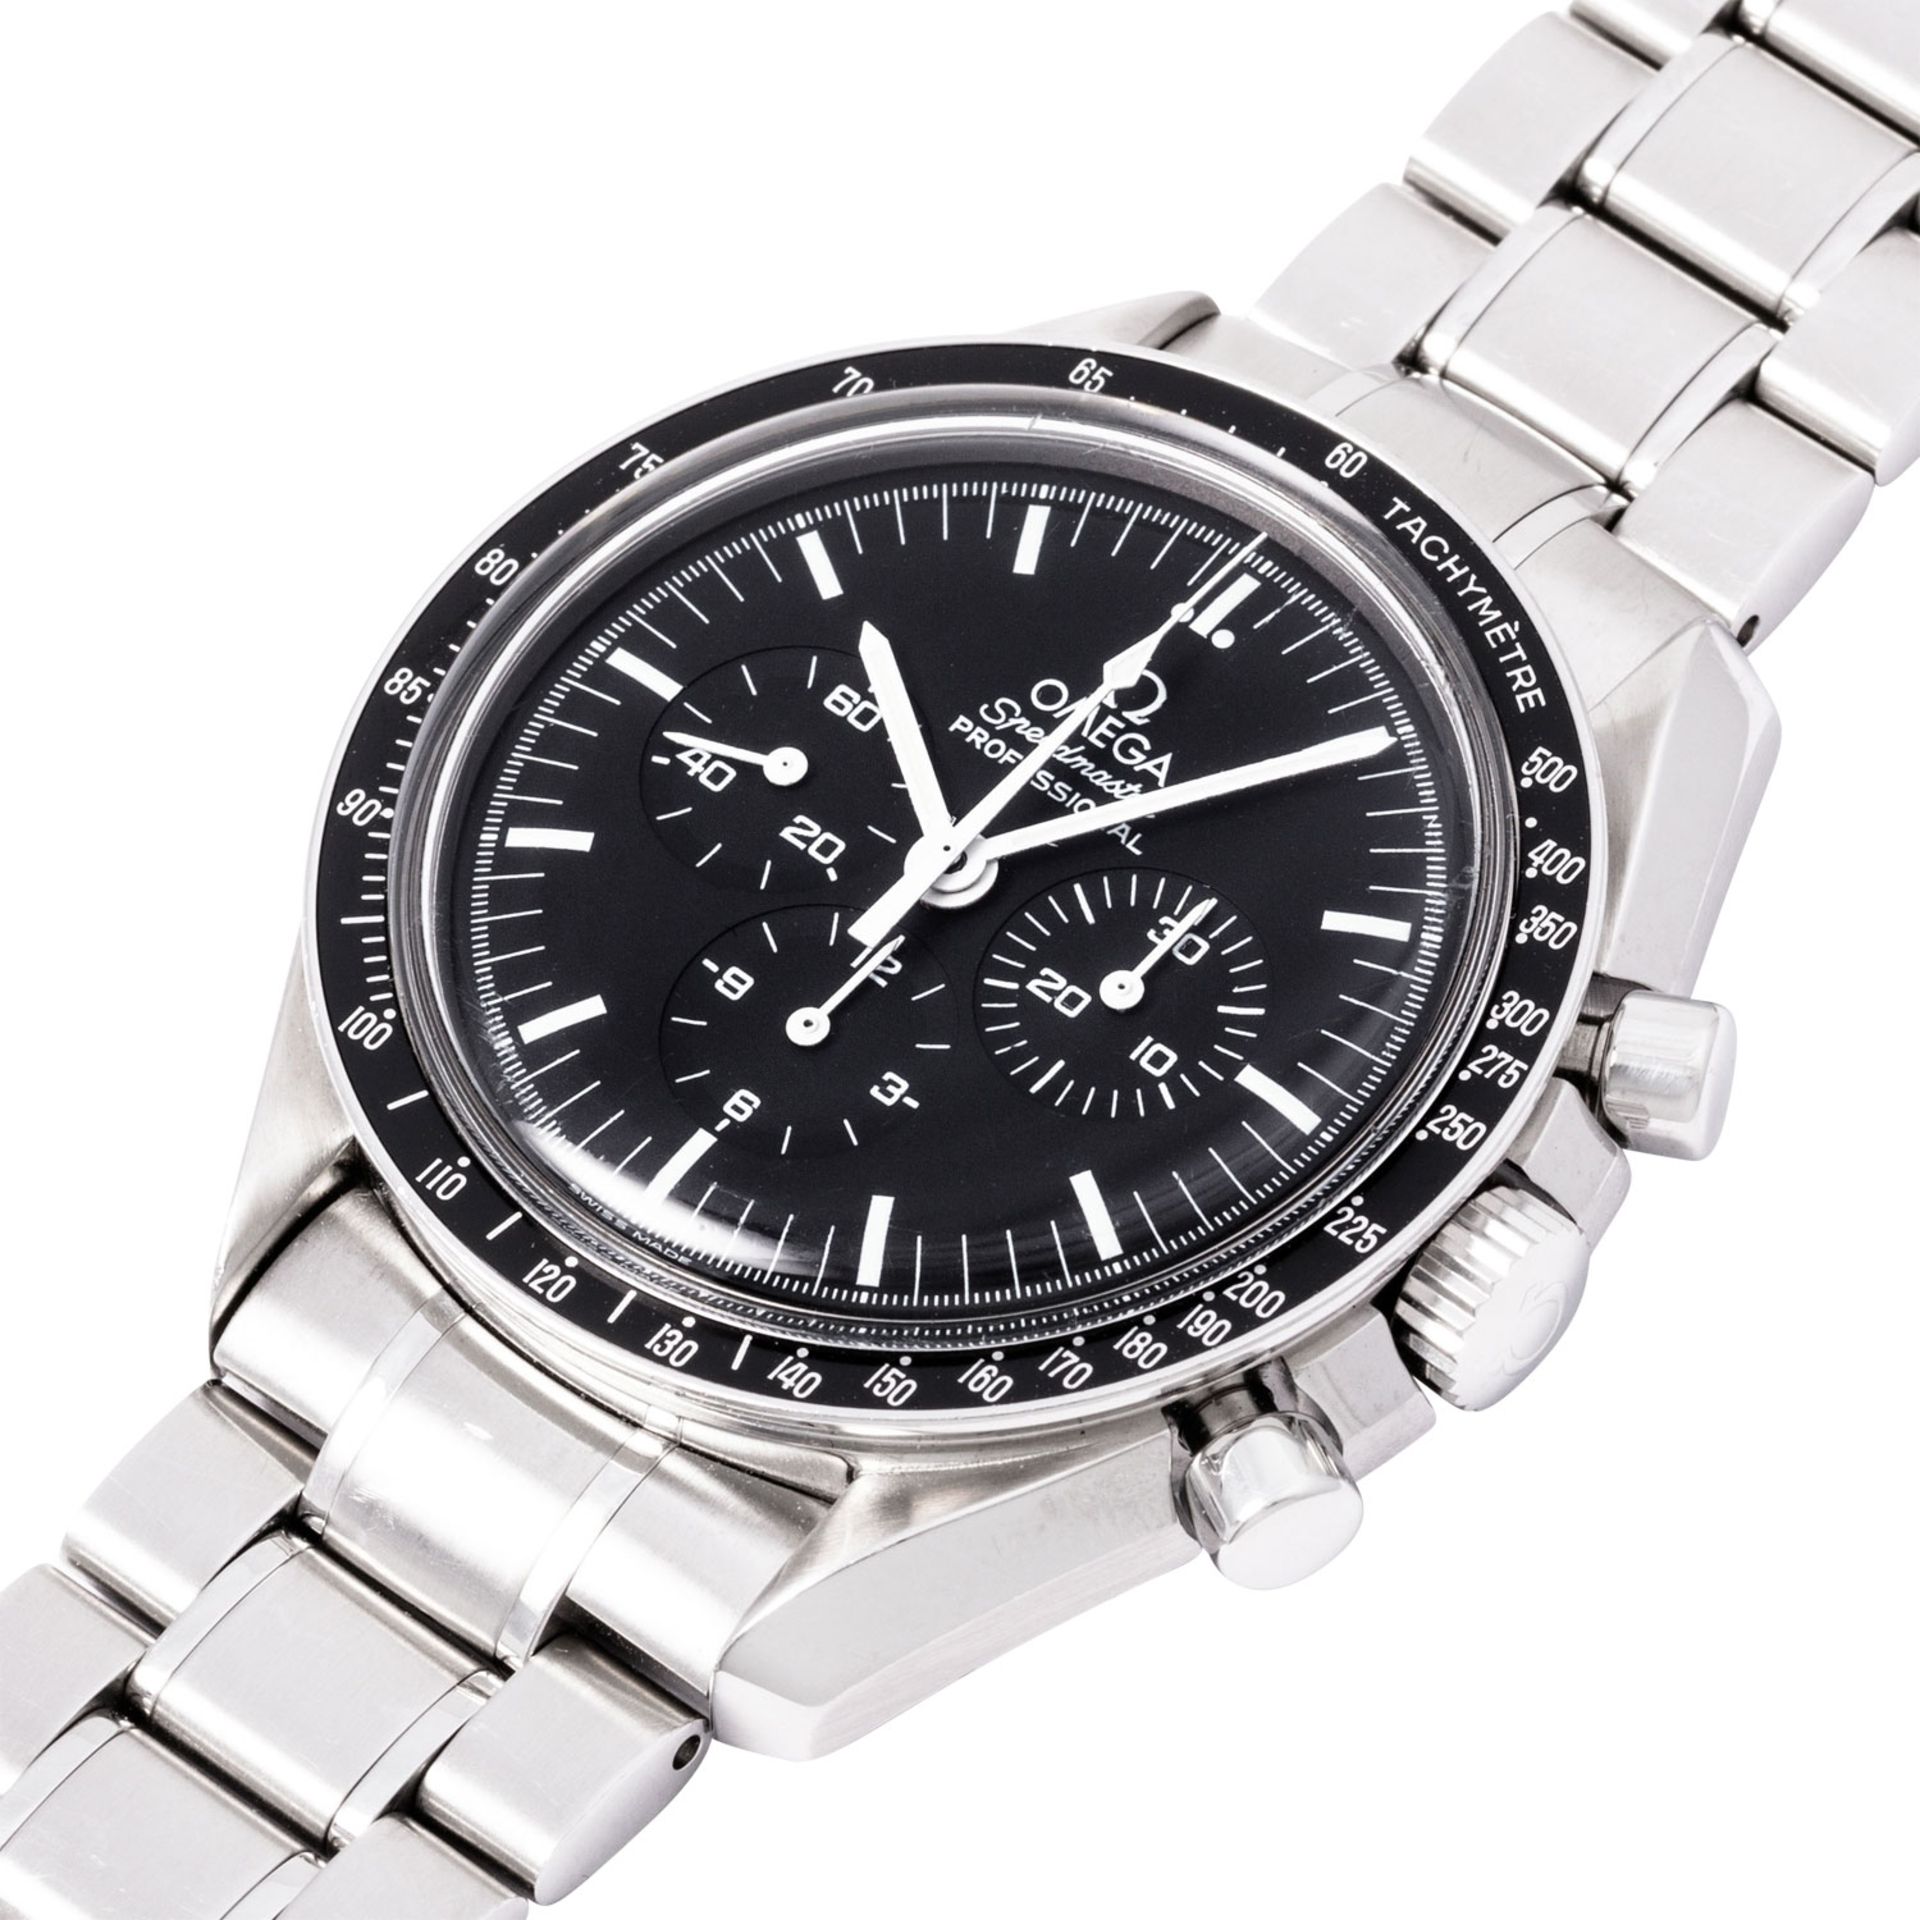 OMEGA Speedmaster Professional Moonwatch Ref. 345.0022 Herren Armbanduhr.  - Bild 5 aus 8